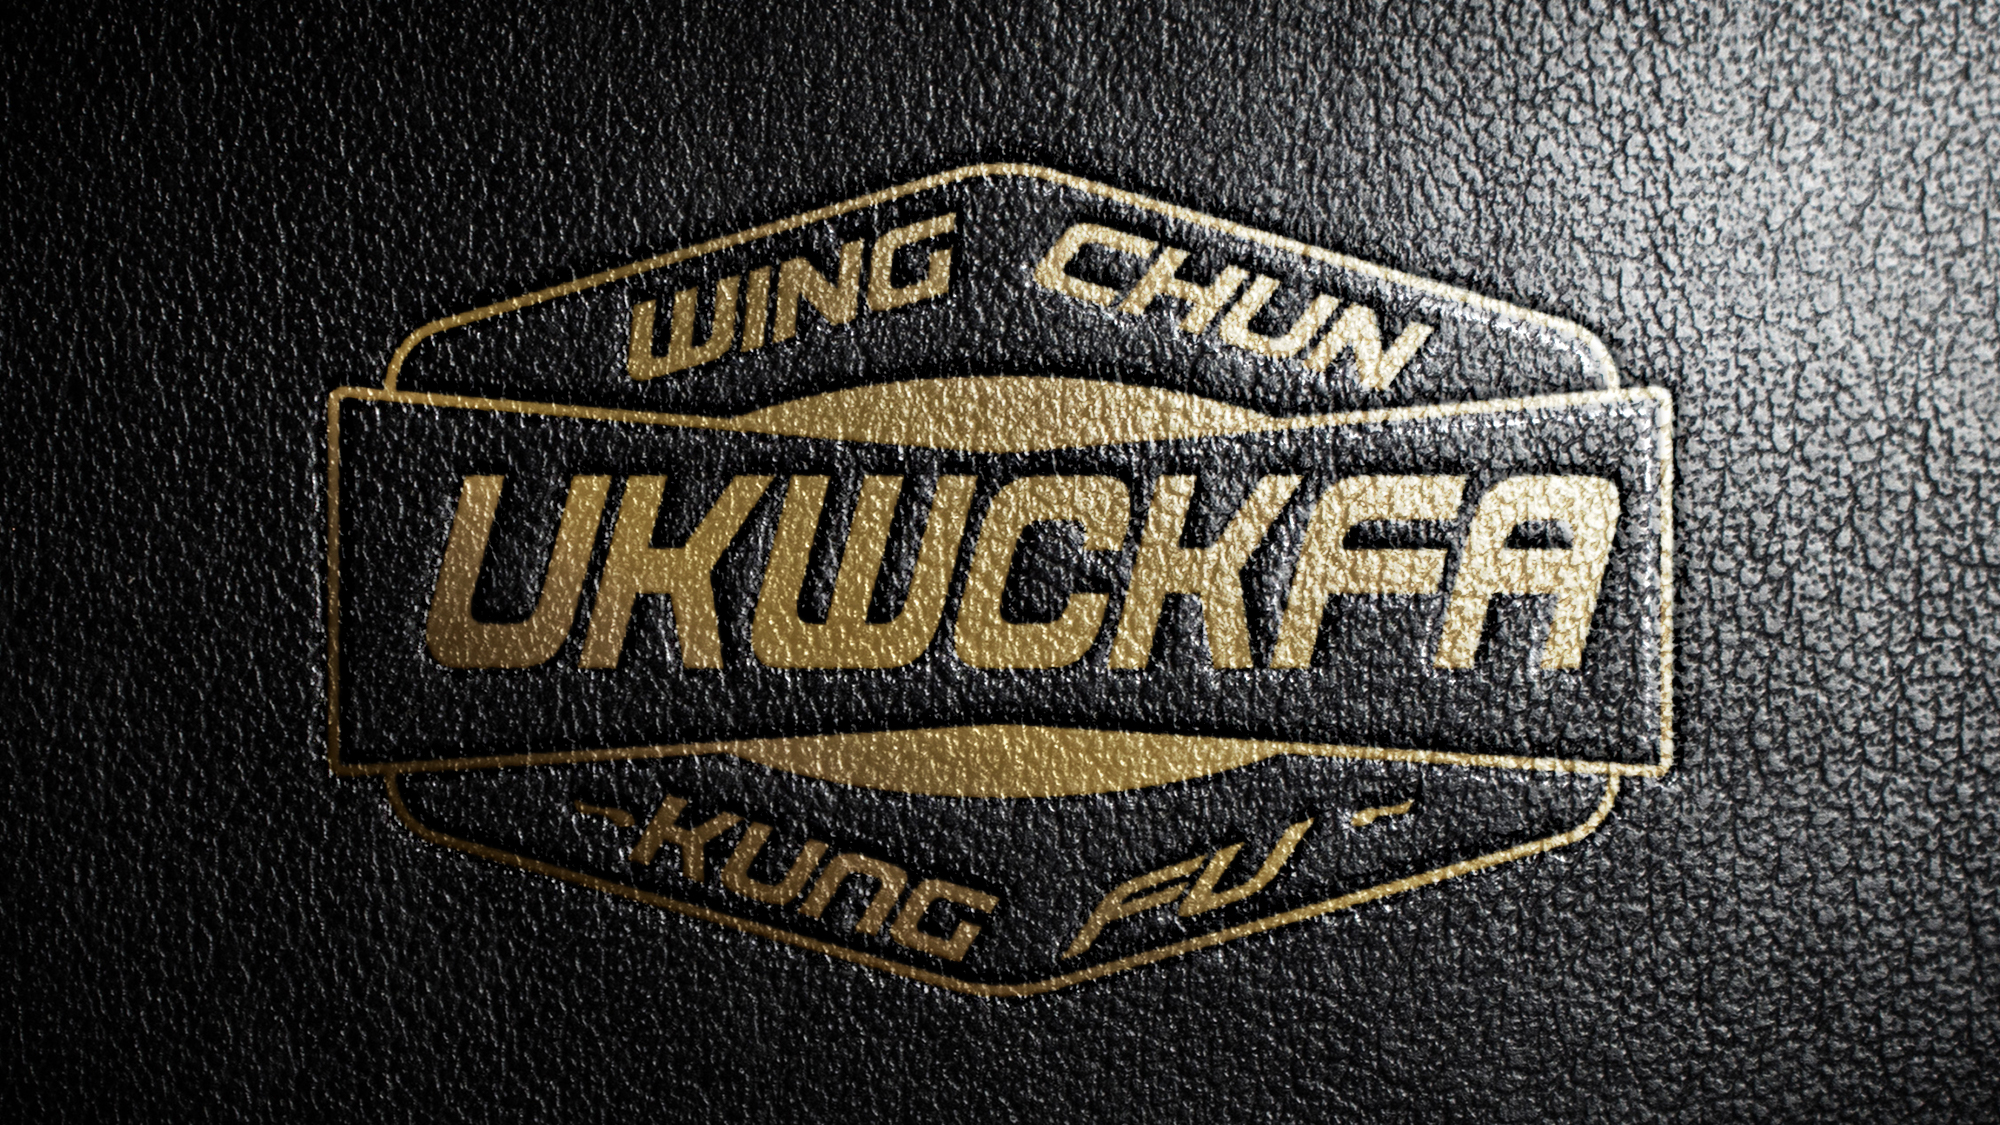 UK Wing Chun Assoc stamp on leather logo